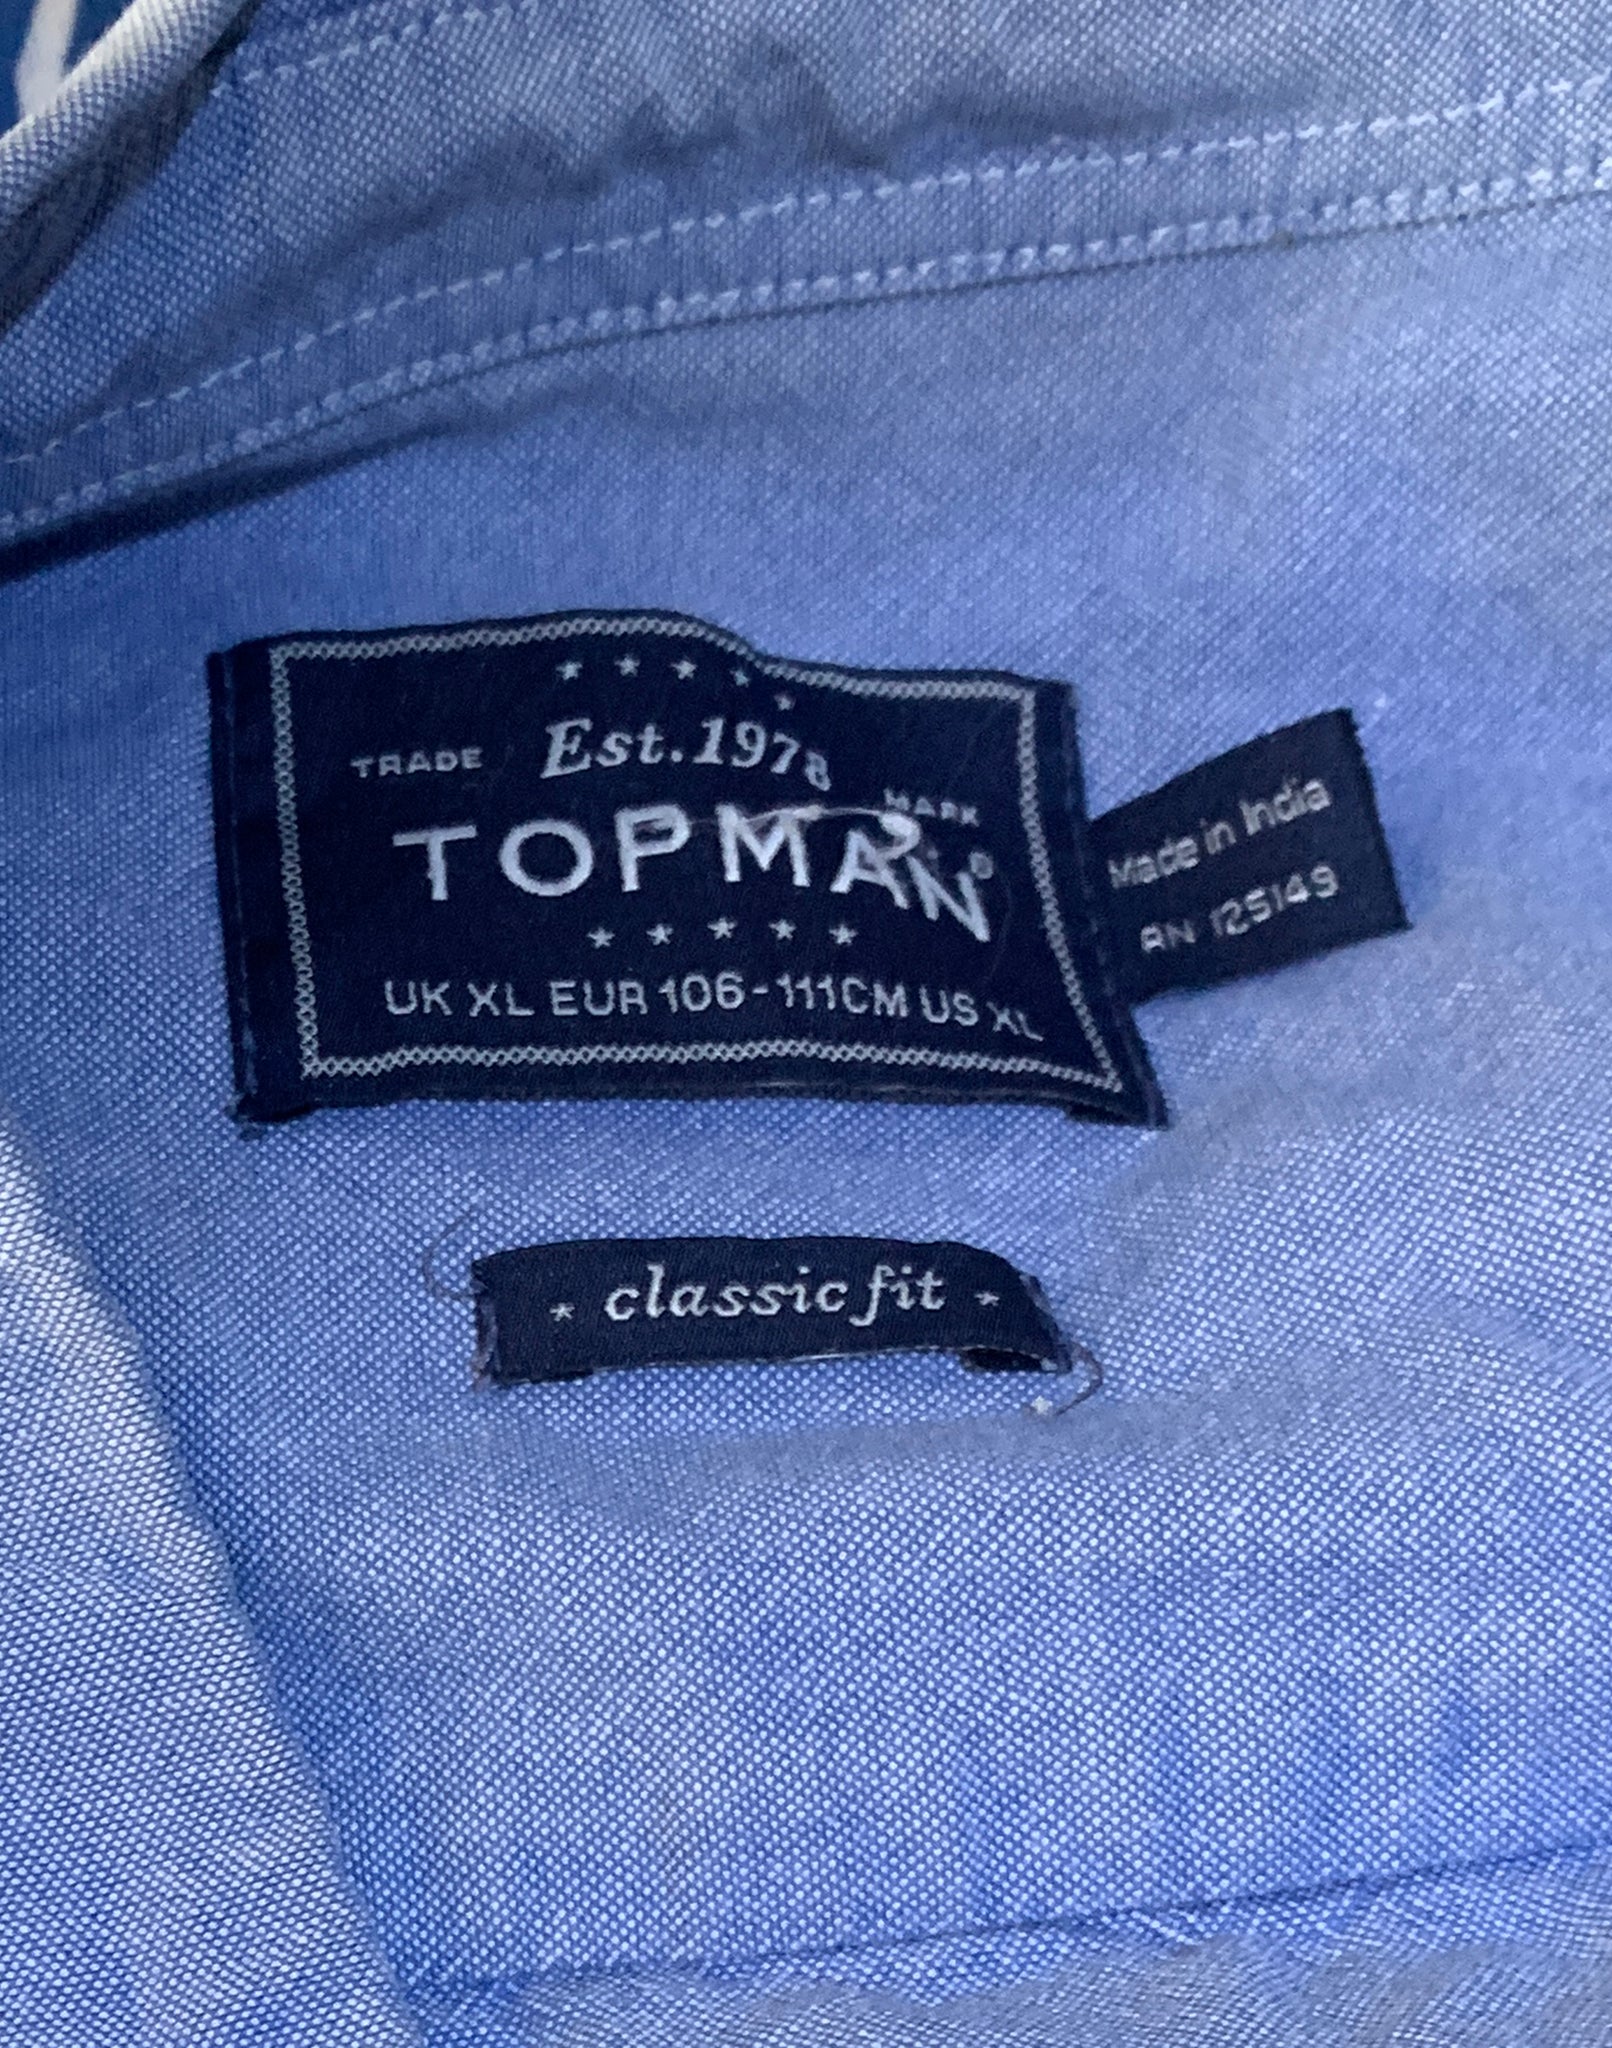 Topman Denim Blue Shirt - Size XLarge